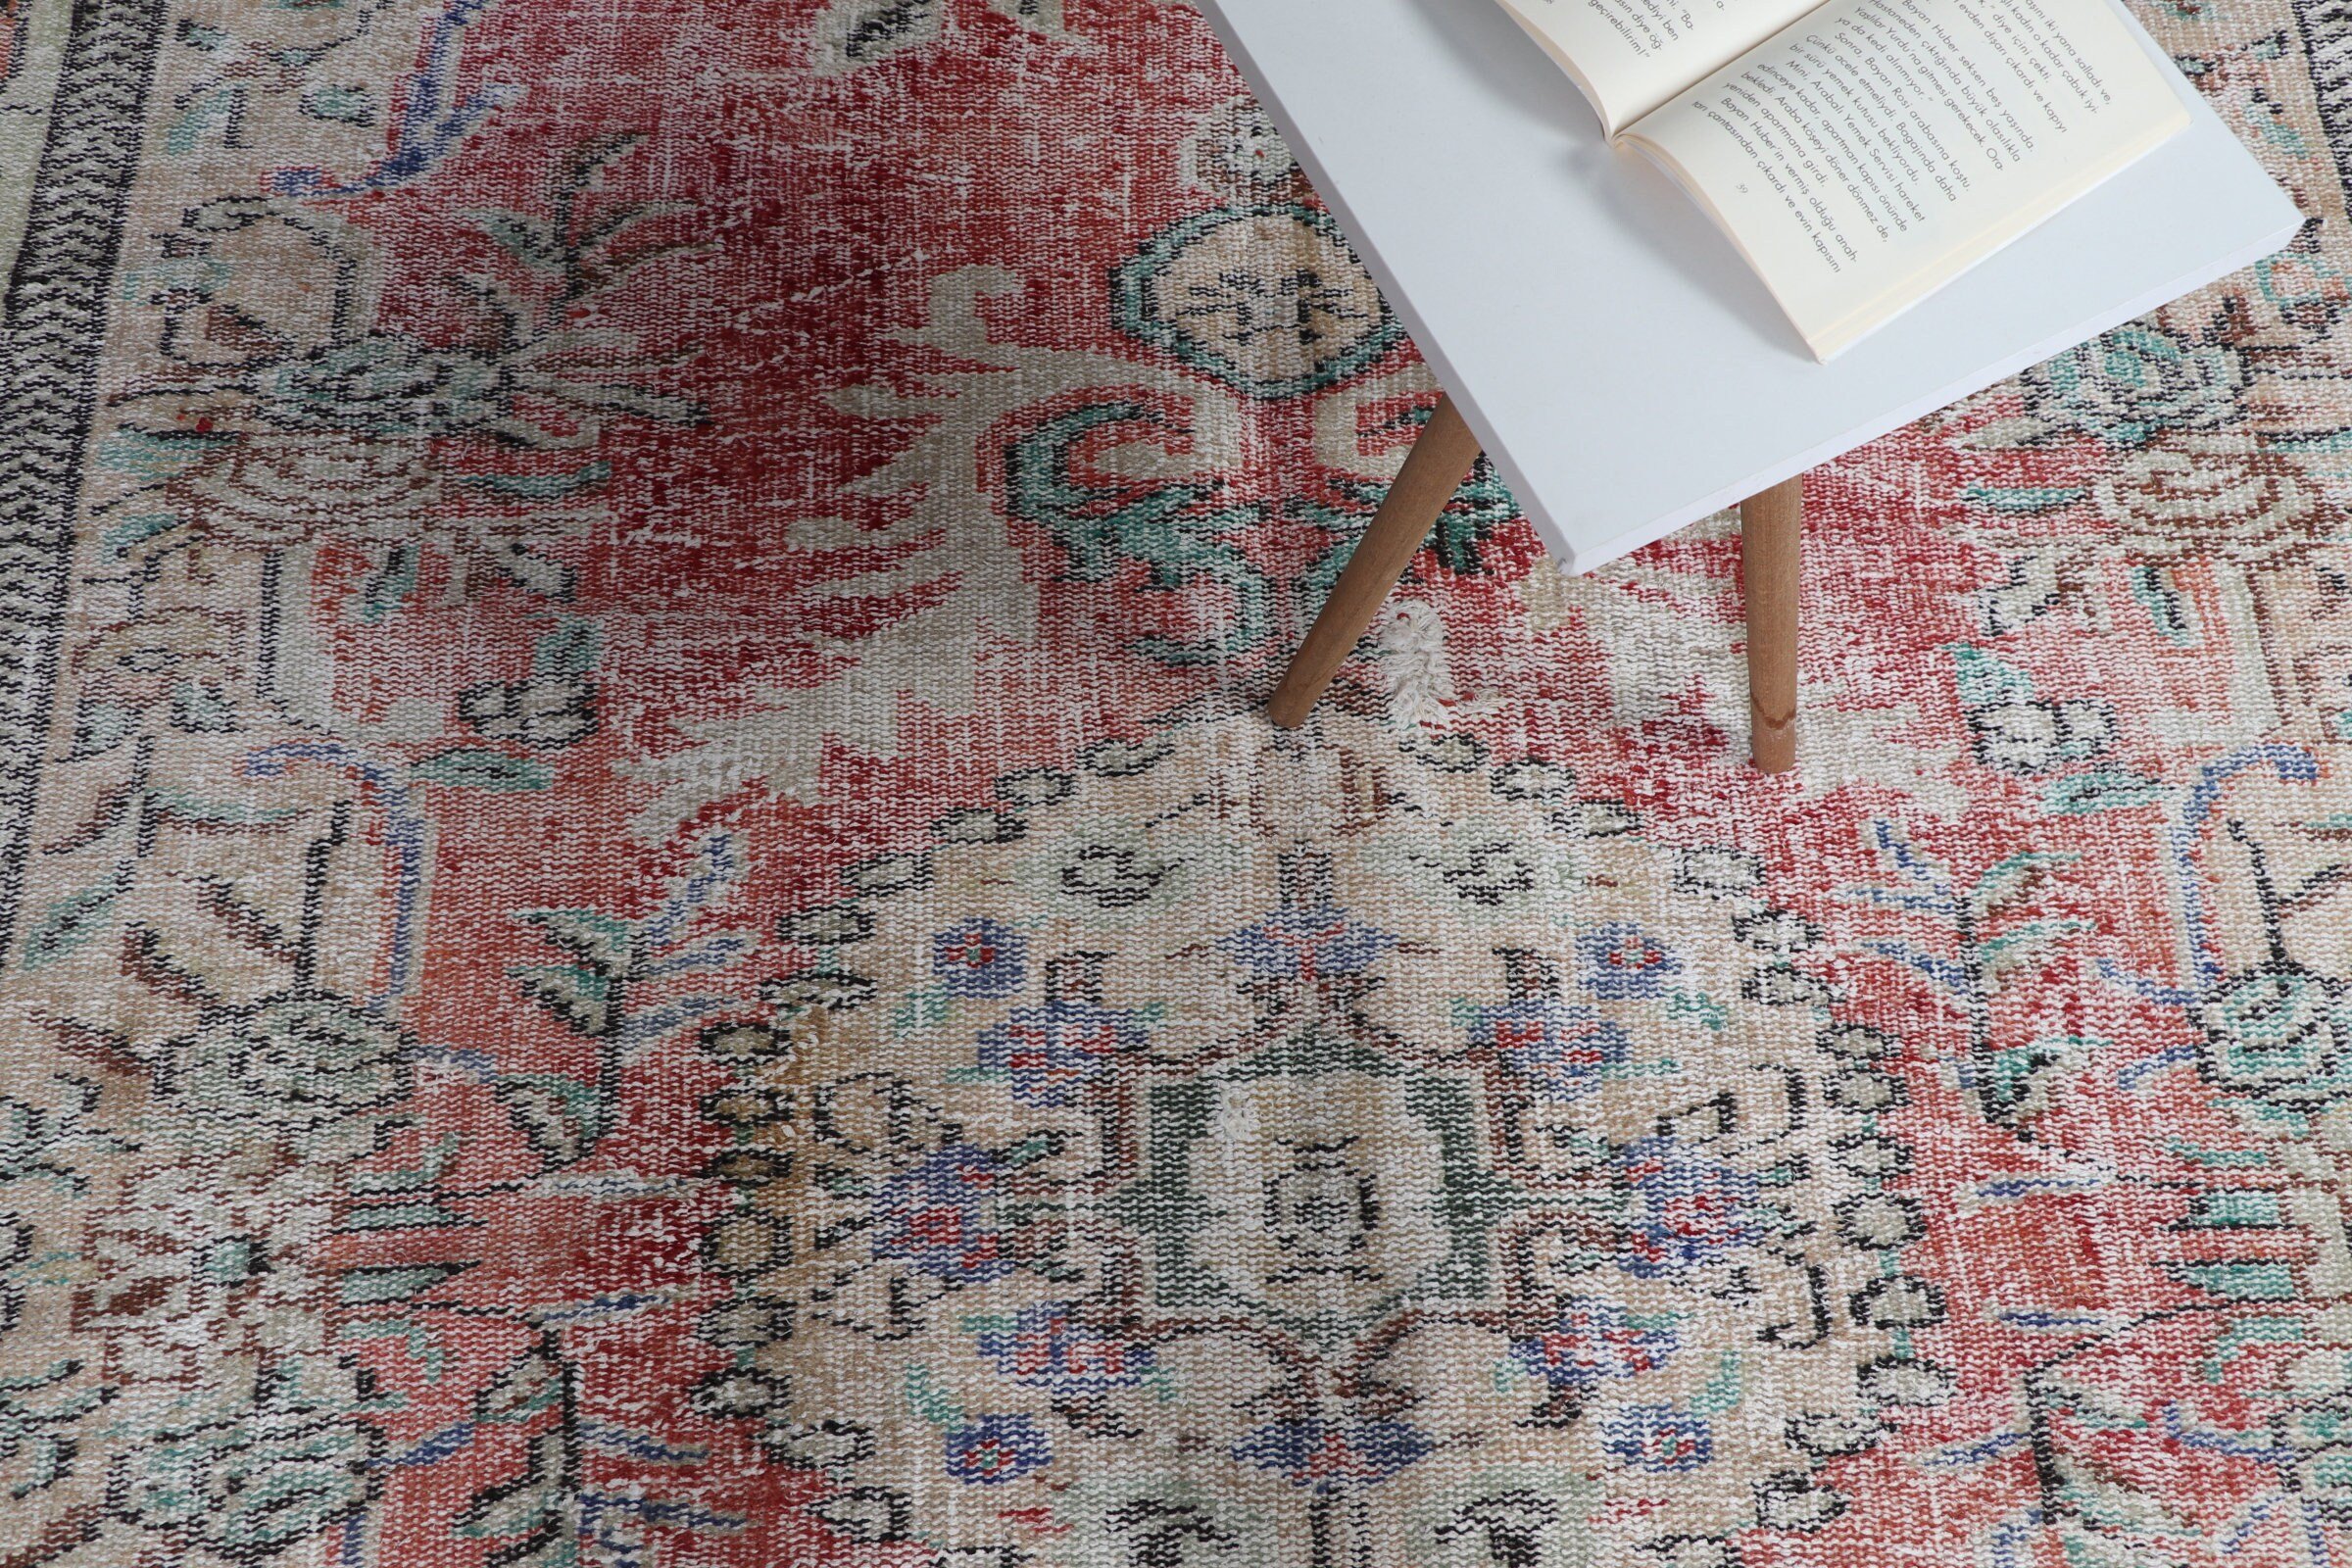 Anatolian Rugs, Living Room Rug, Red Kitchen Rugs, Vintage Rugs, 5.4x9 ft Large Rug, Bedroom Rugs, Dorm Rugs, Oriental Rugs, Turkish Rug